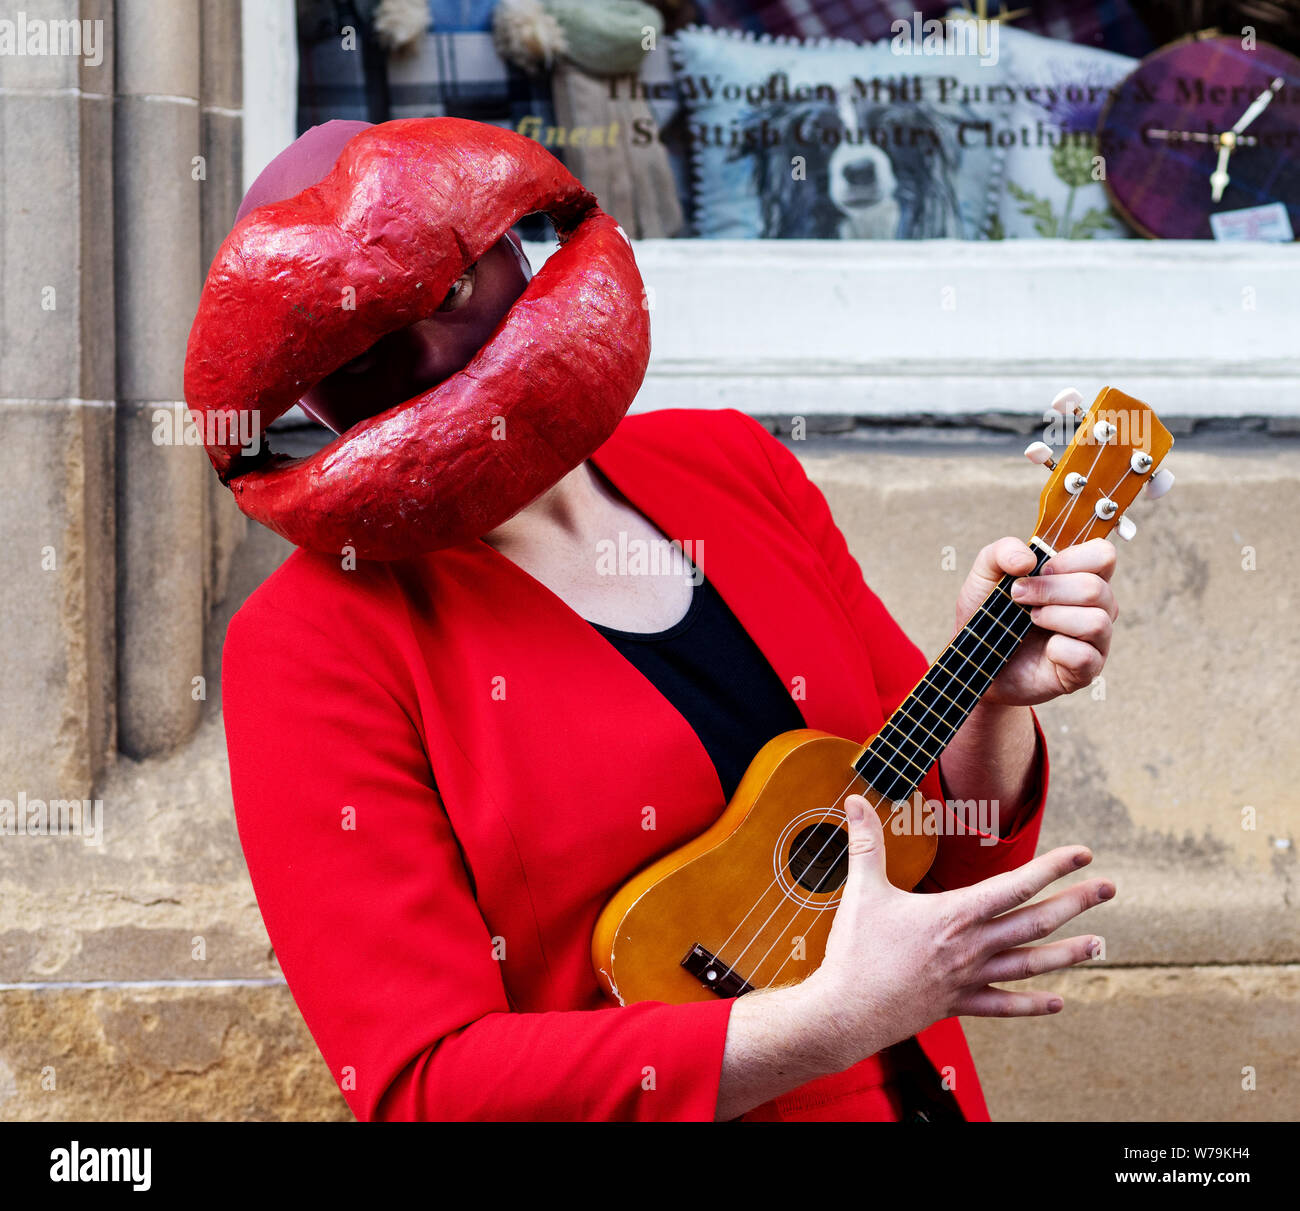 A street performer with big red lips and a ukelele Edinburgh Festival Fringe 2019 - The Royal Mile, Edinburgh, Scotland, UK. Stock Photo